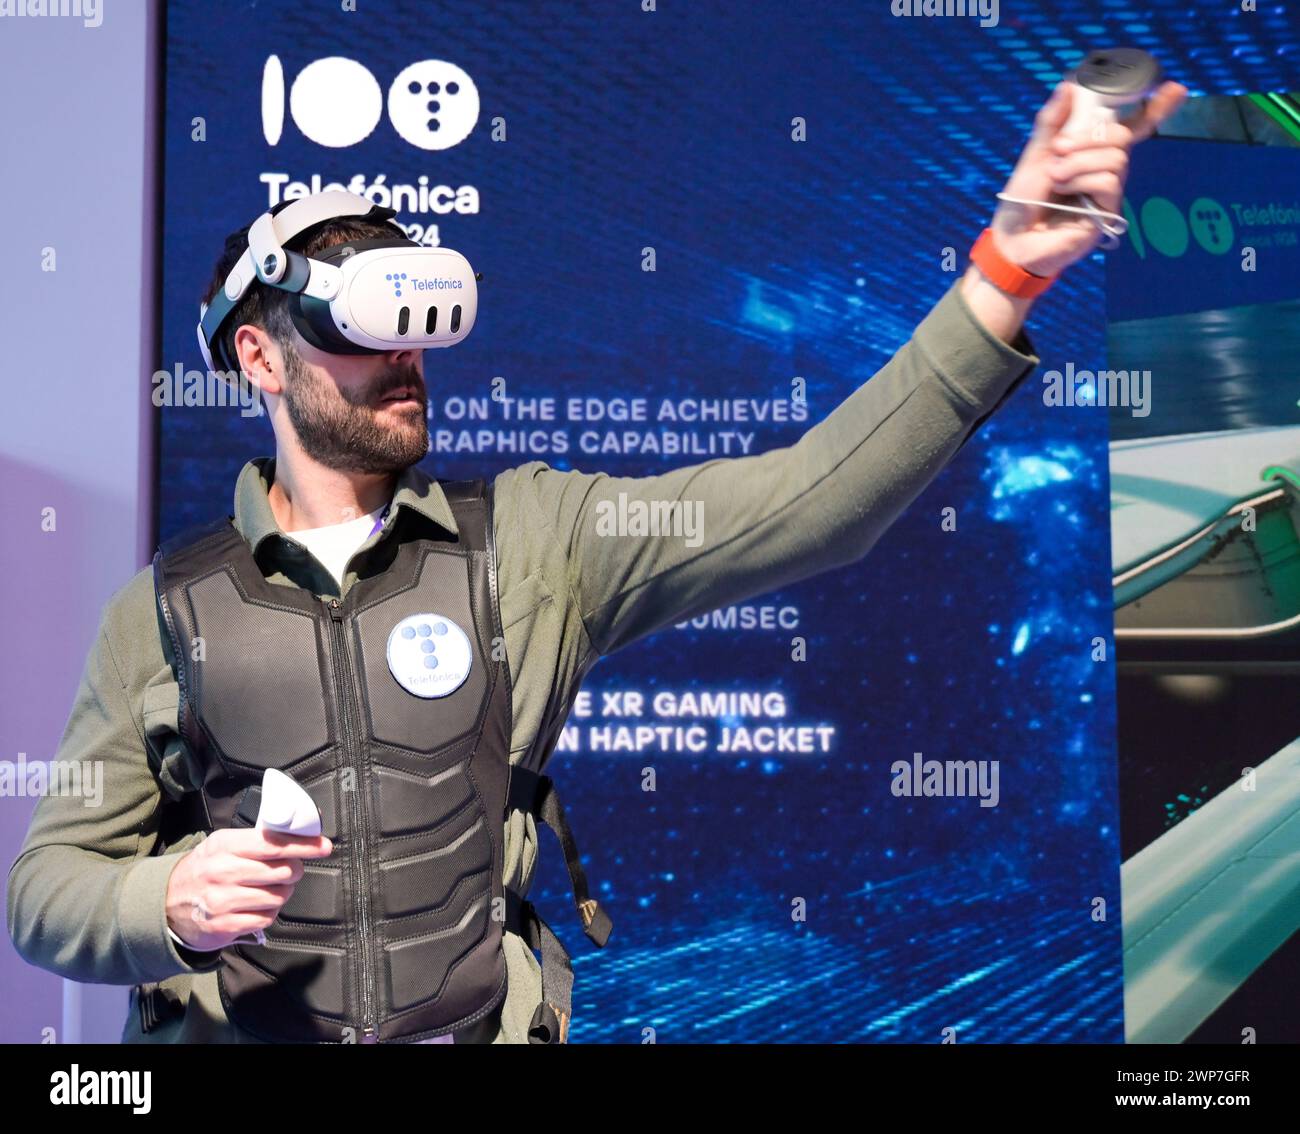 Virtuelles Spiel mit VR-Brille, telefonica Messestand Edge Haptic Arena, MWC Mobile World Congress, Barcellona, Spagna Foto Stock